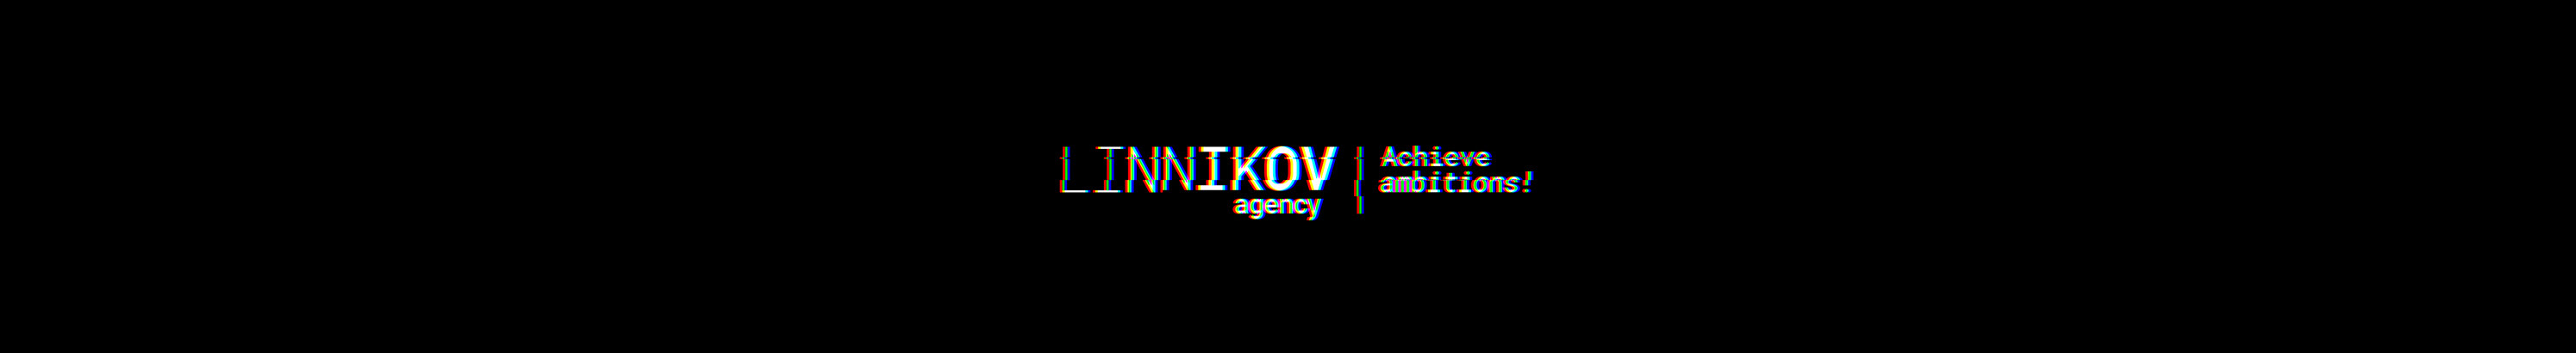 linnikov agency's profile banner